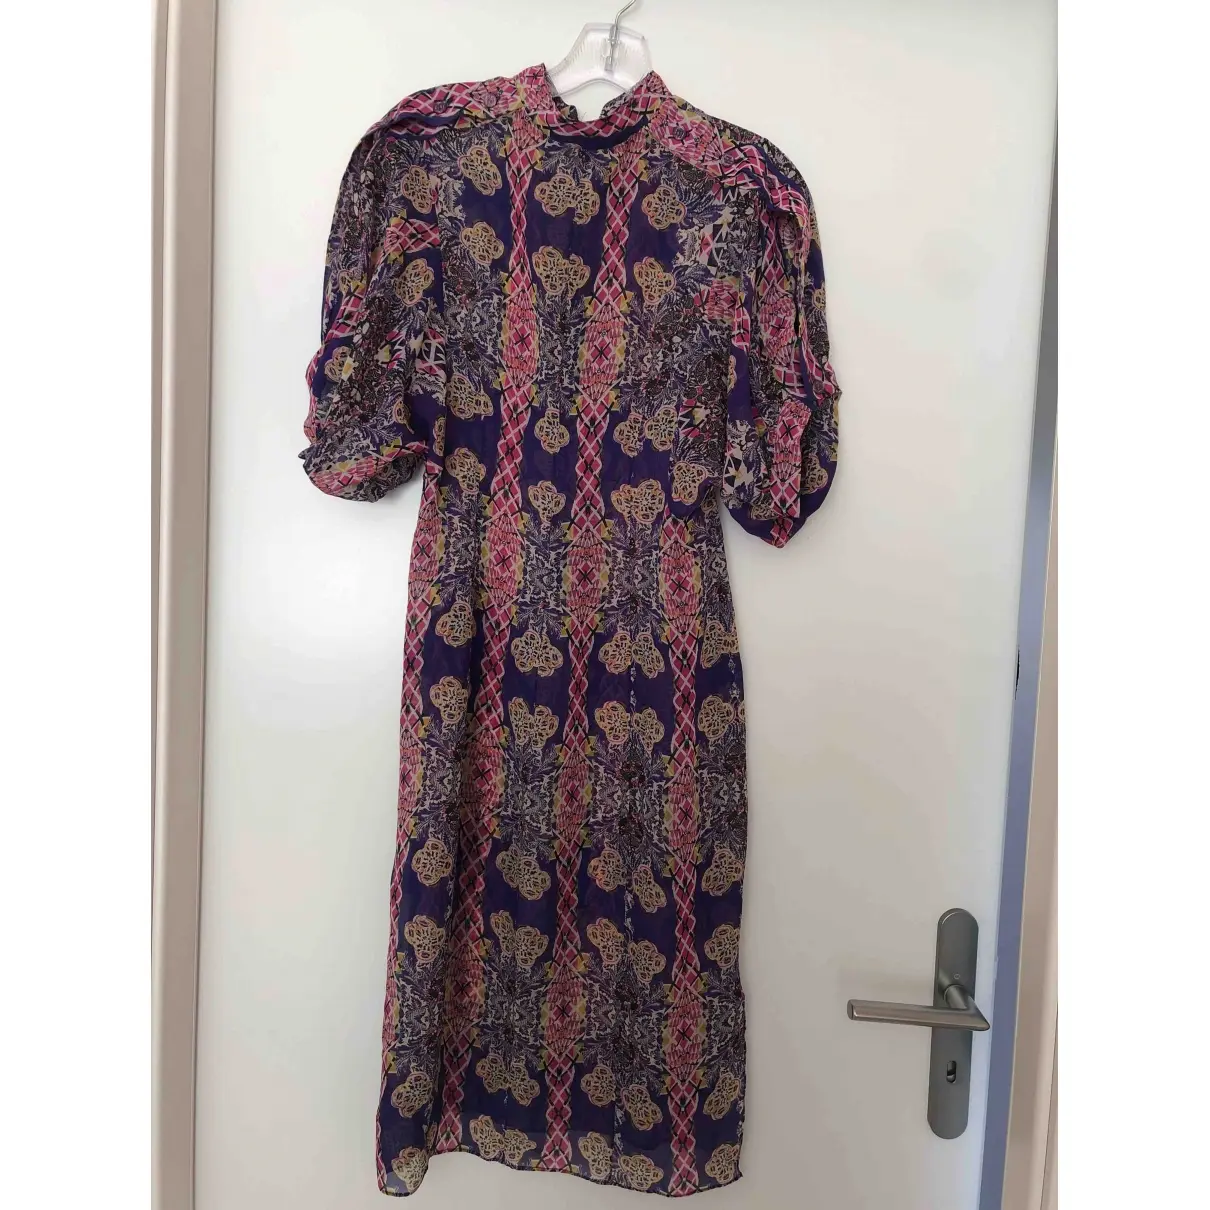 Buy Zac Posen Silk mid-length dress online